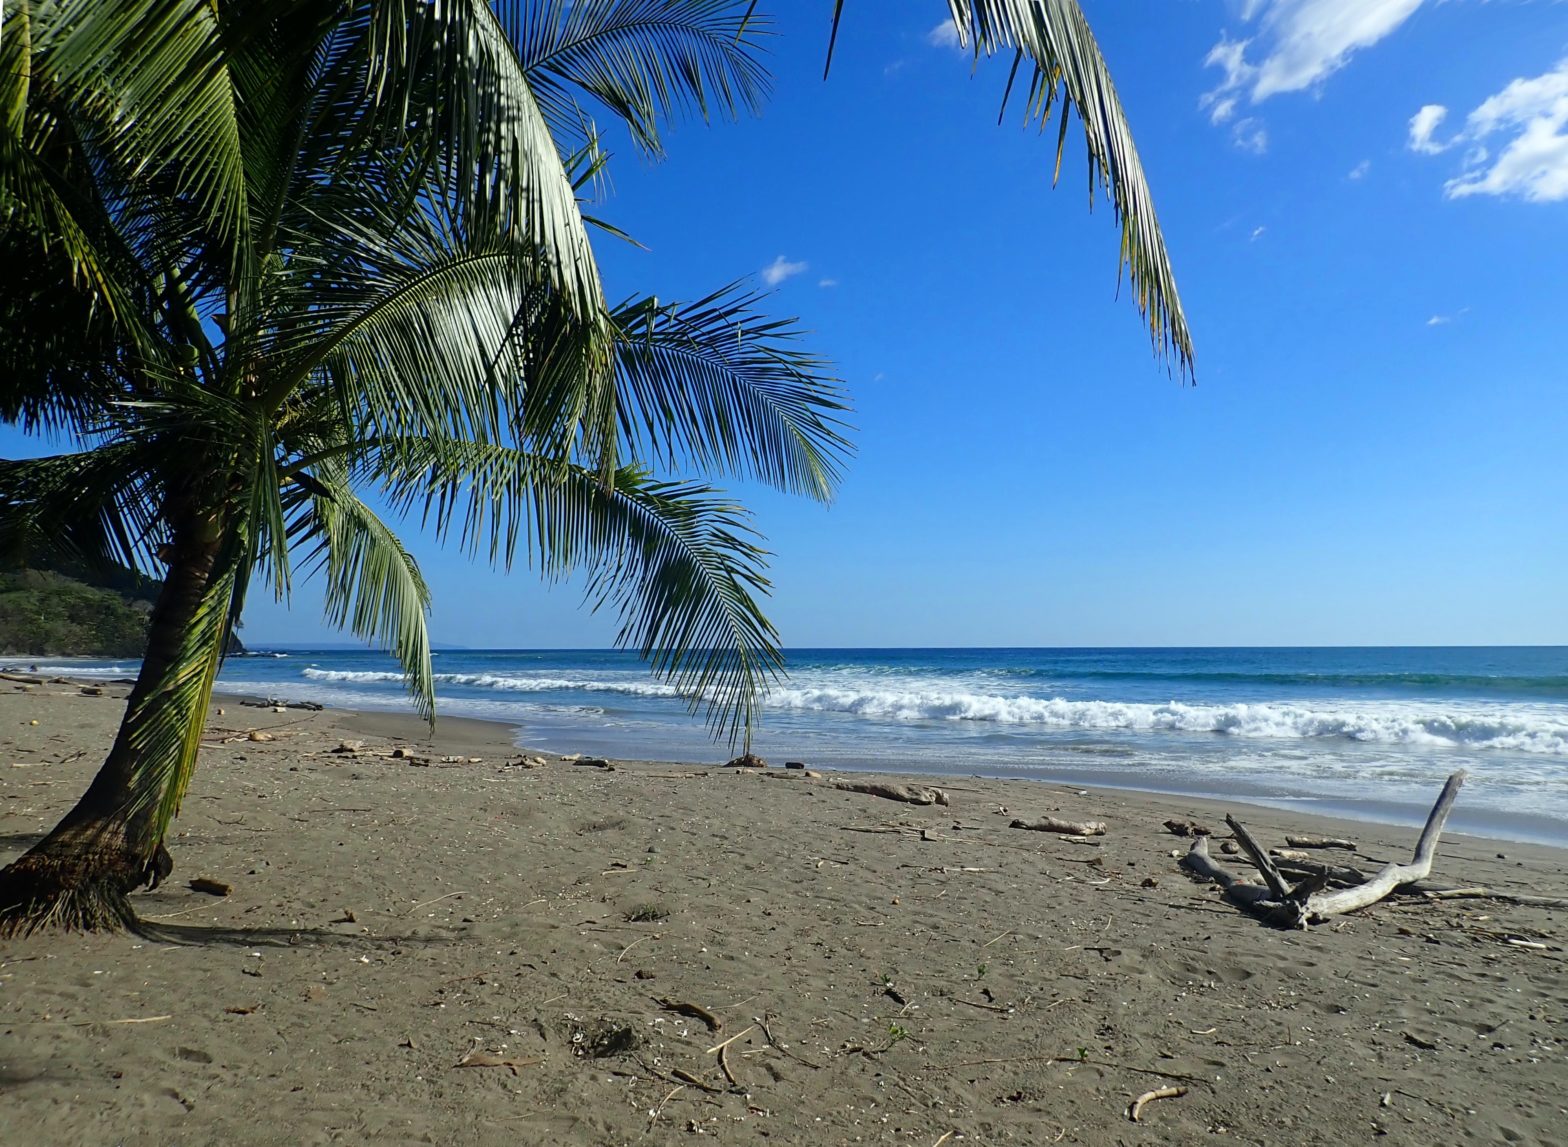 view of a beach in the hidden gem Costa Rica town of Nosara